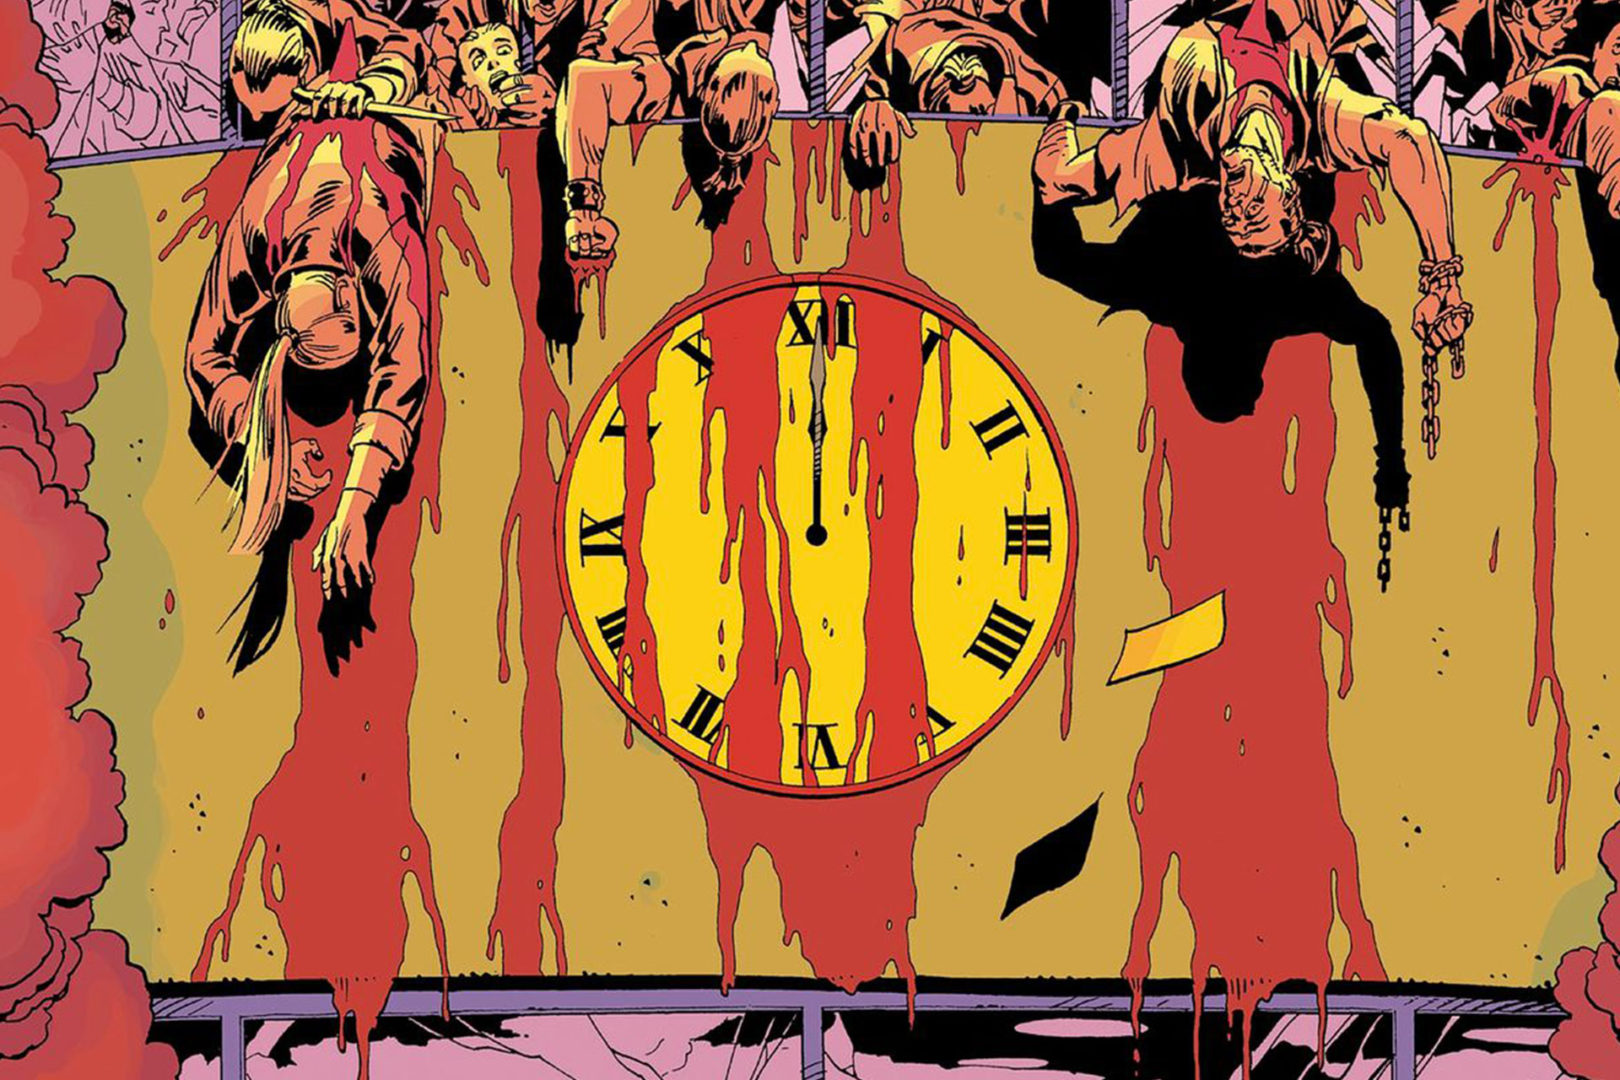 Lampoon, Doomsday clock in Watchmen